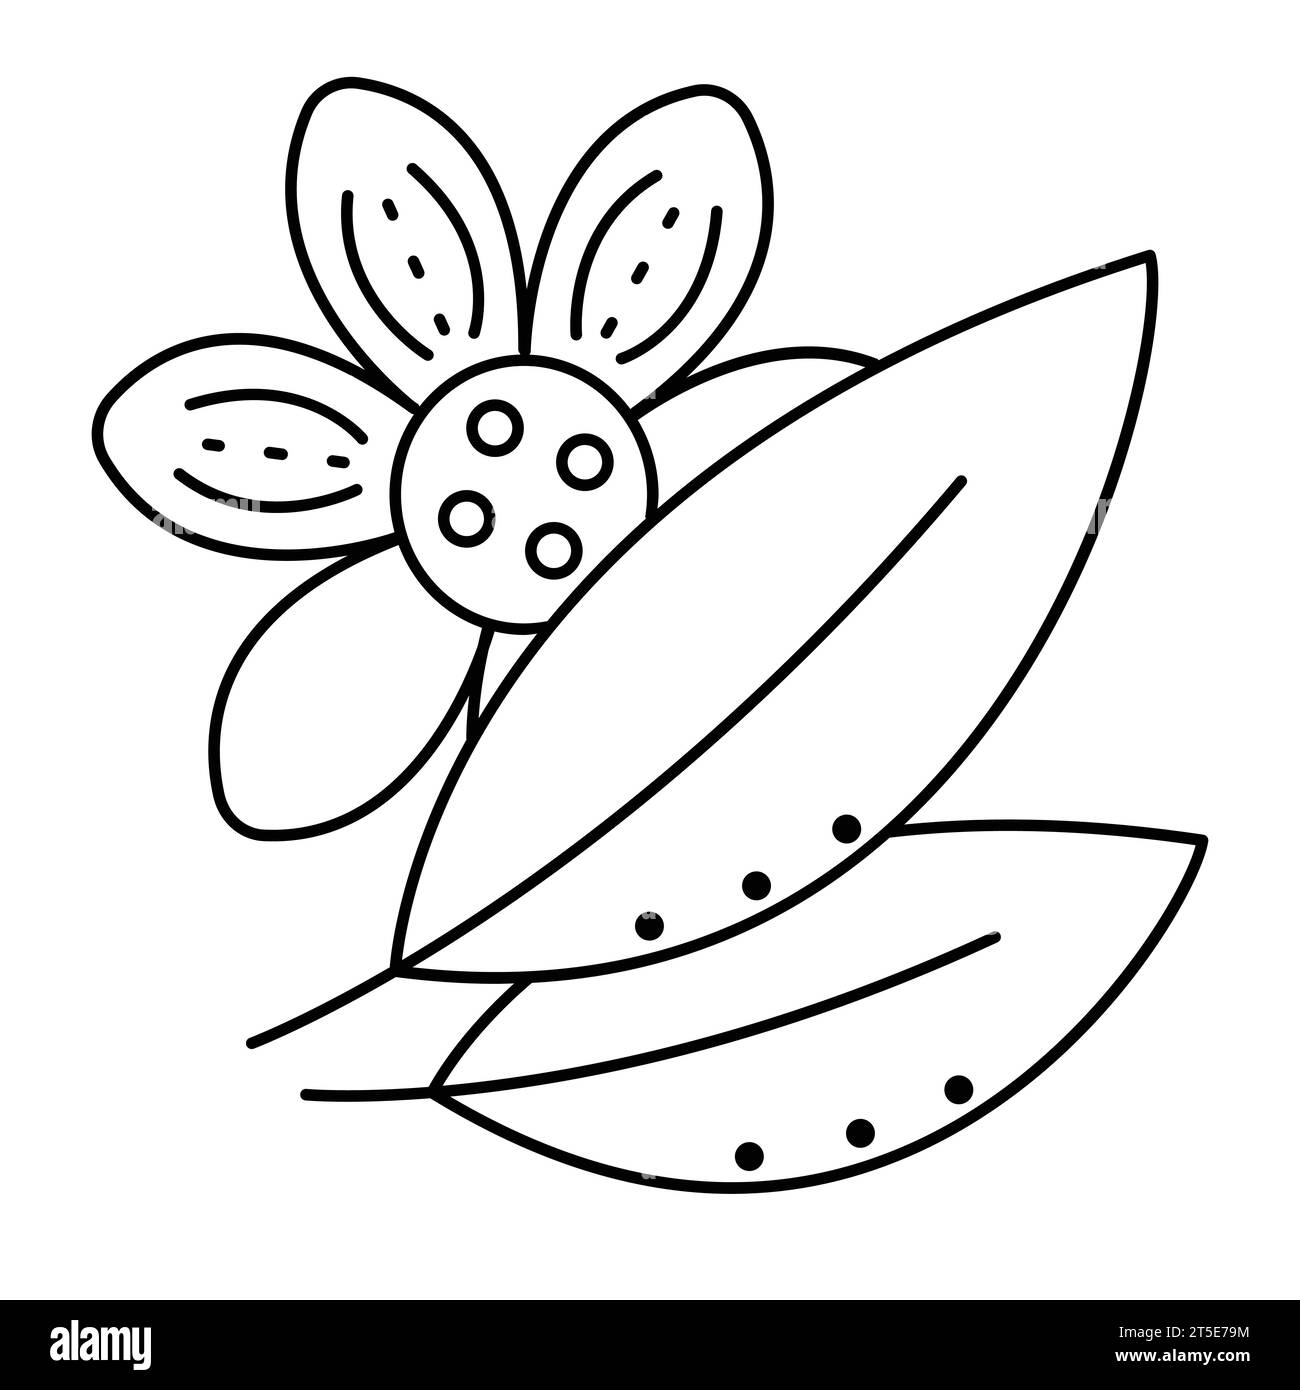 How to draw JASMINE Flower for Beginners| EASY - YouTube